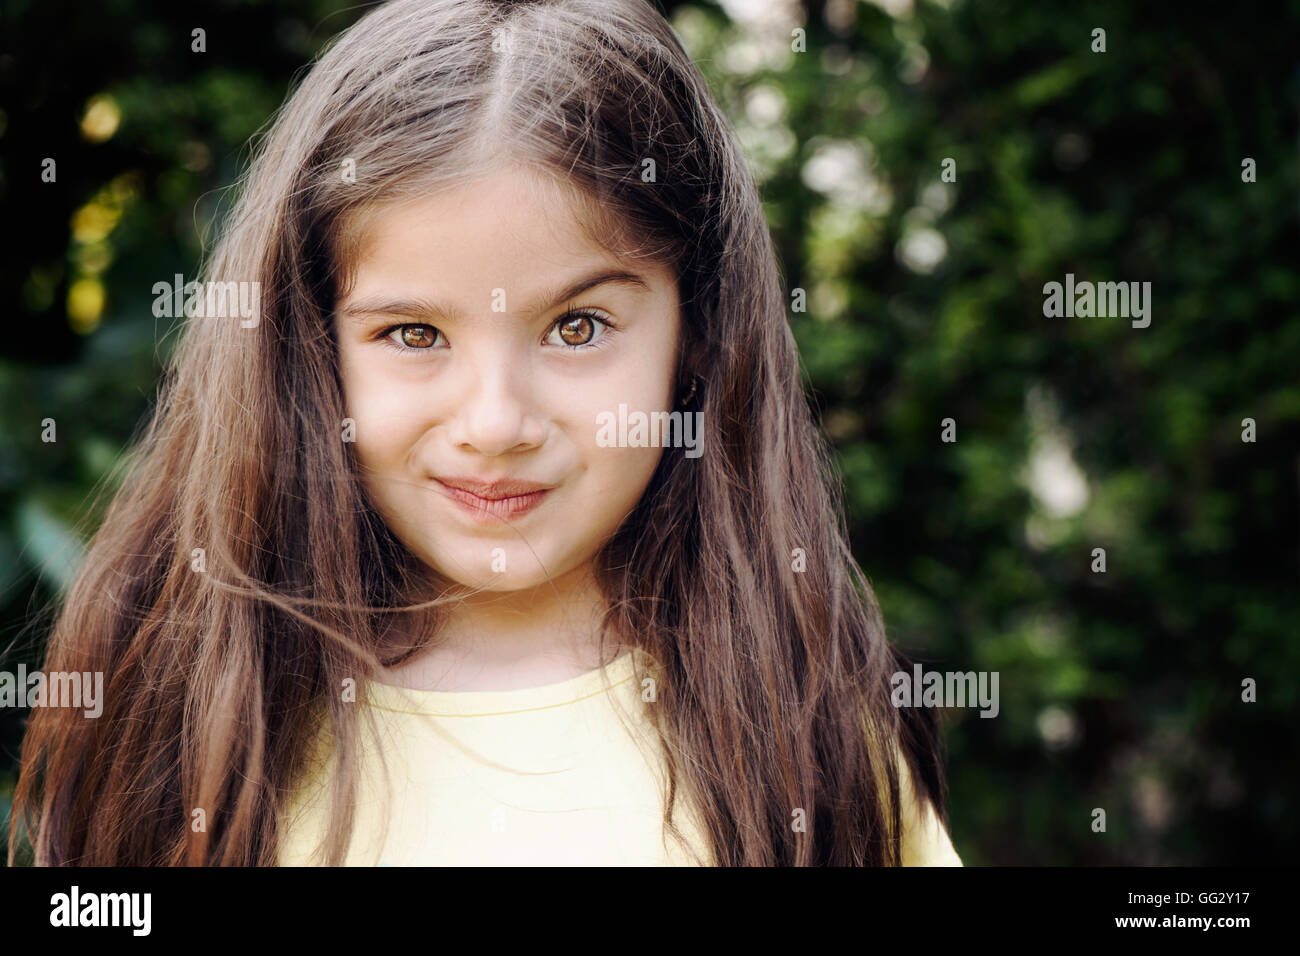 Little girl raising her eyebrow Stock Photo